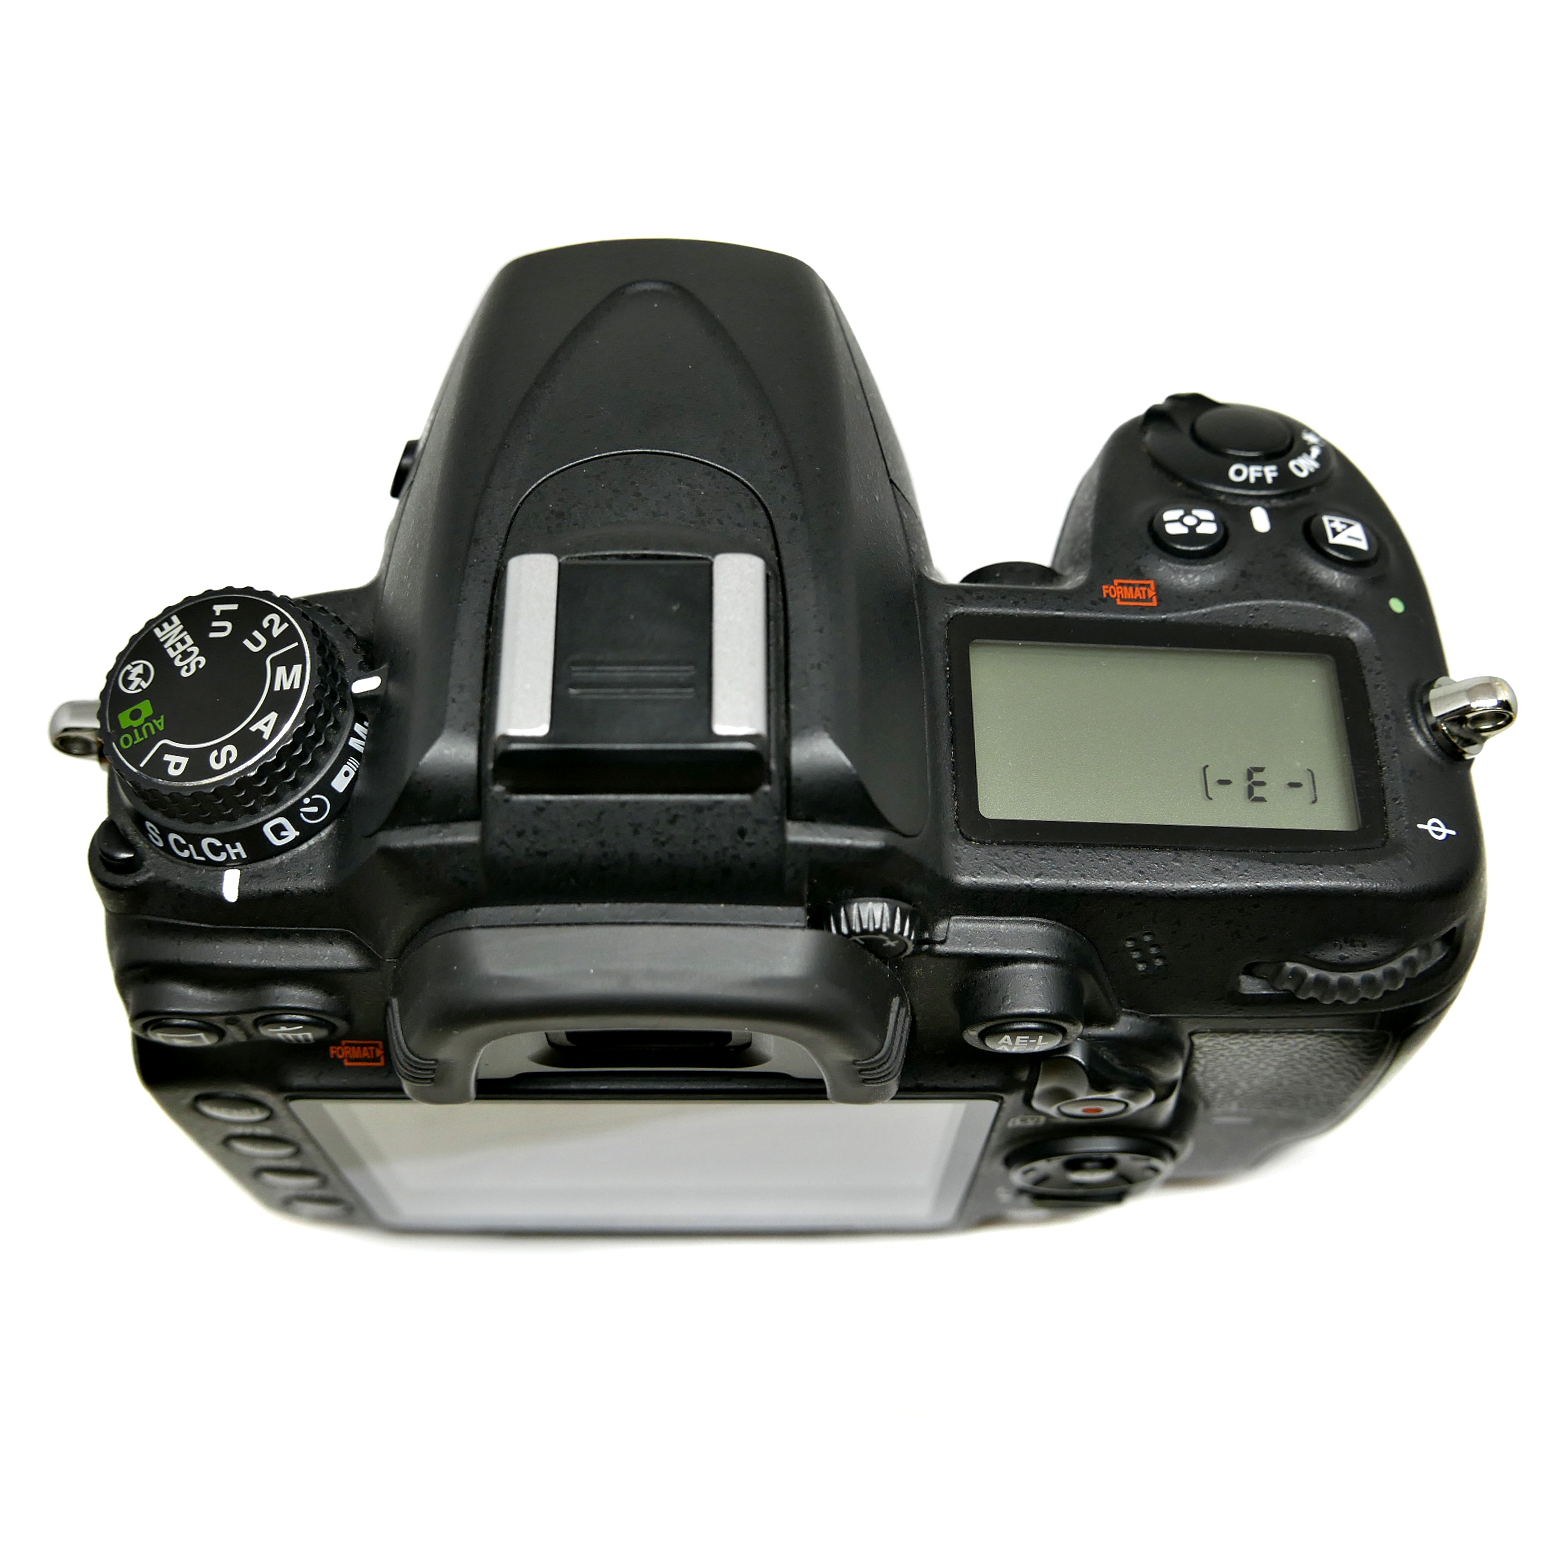 (Myyty) Nikon D7000 runko (SC:14305) (käytetty)